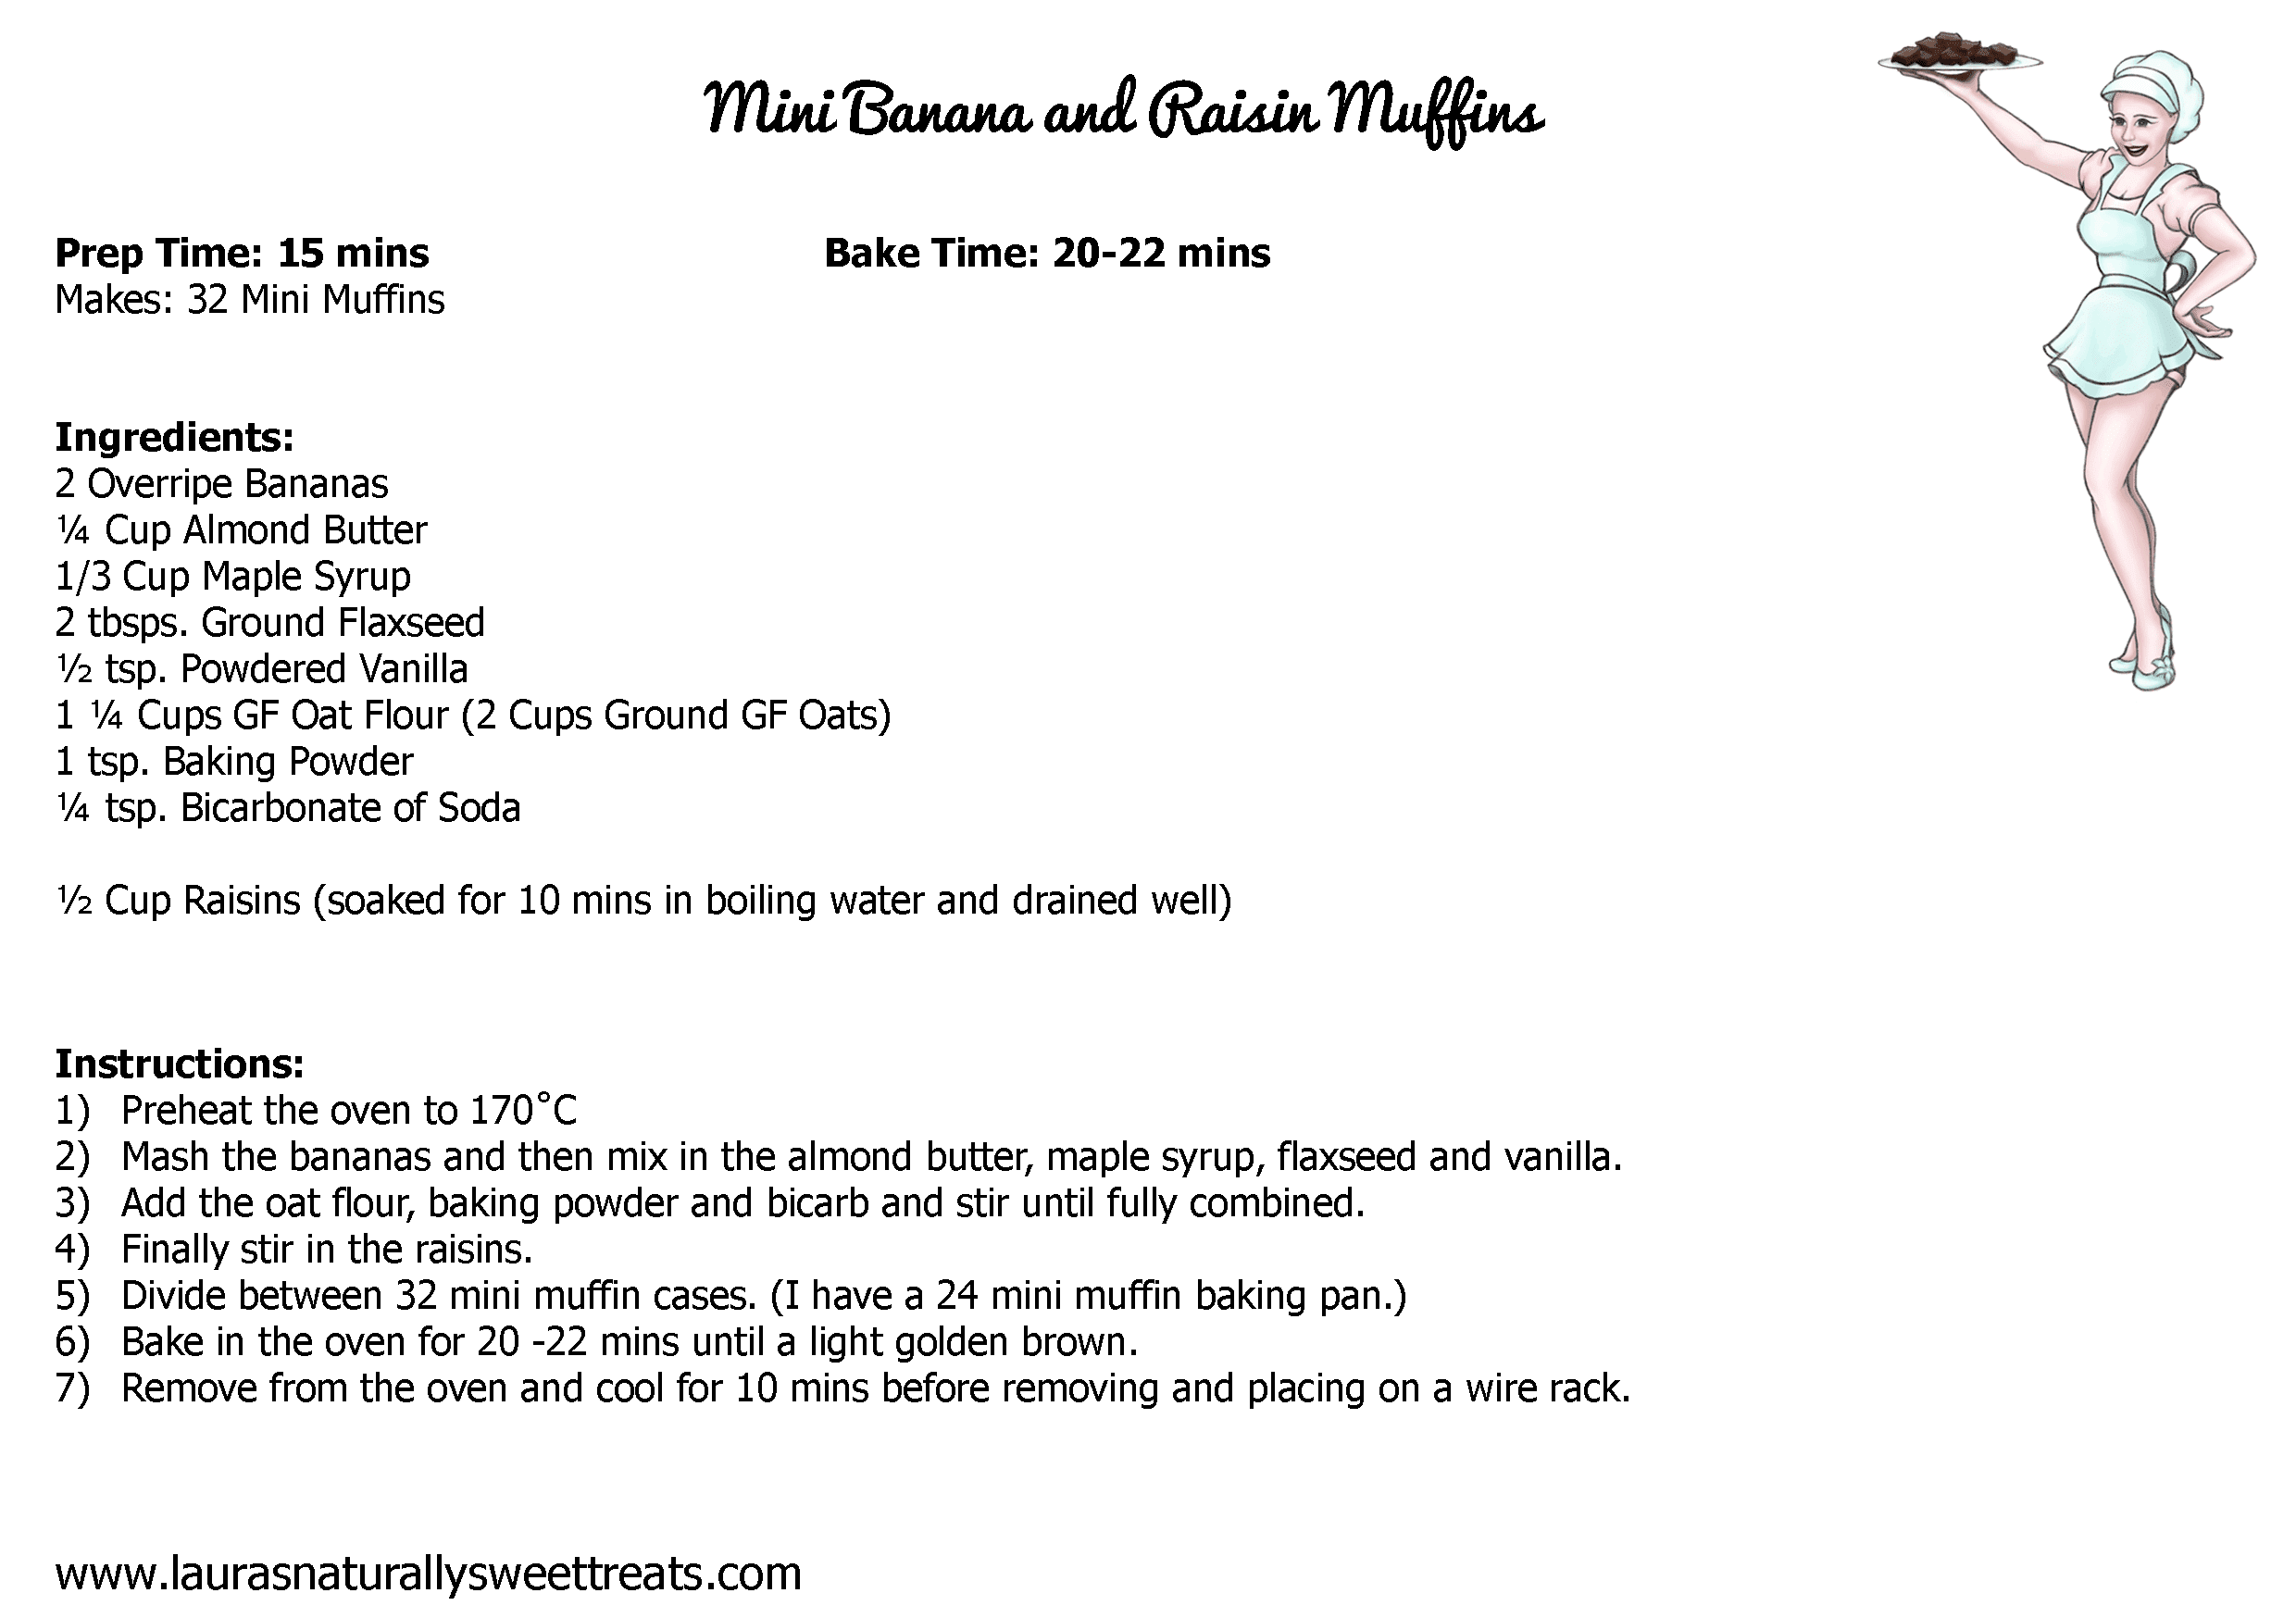 mini banana and raisin muffins recipe card